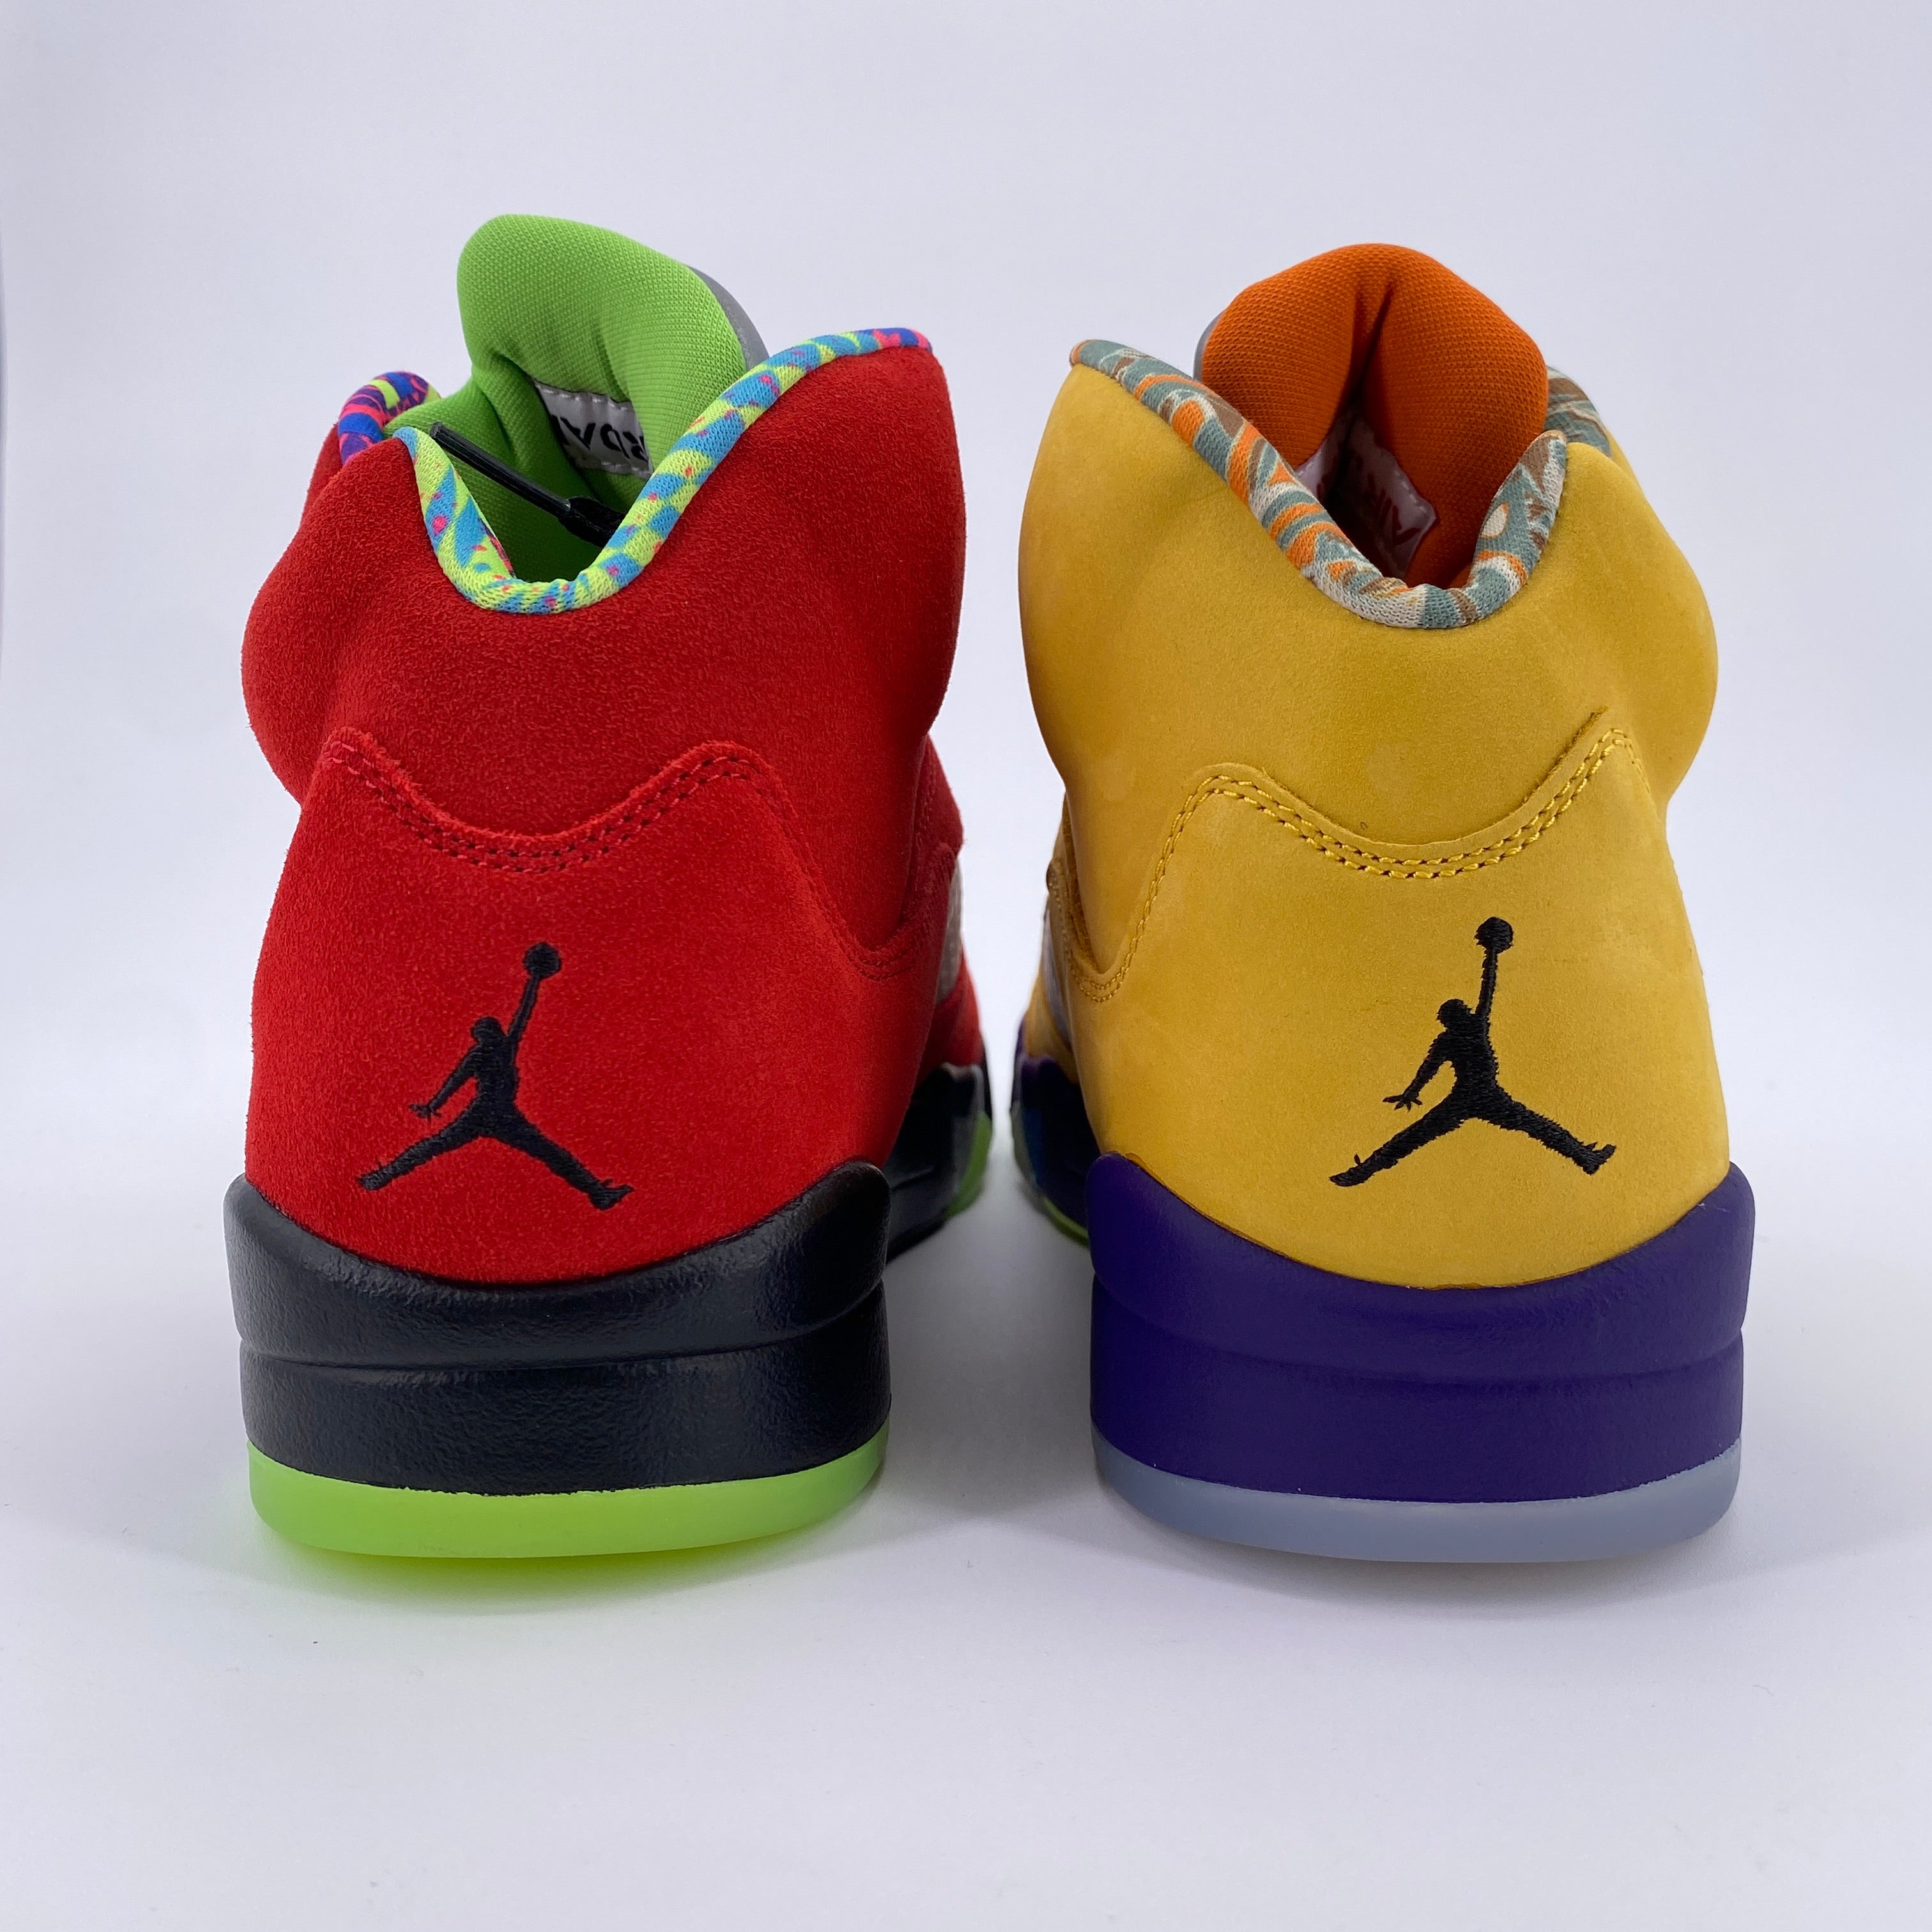 Air Jordan 5 Retro &quot;What The&quot; 2020 New Size 11